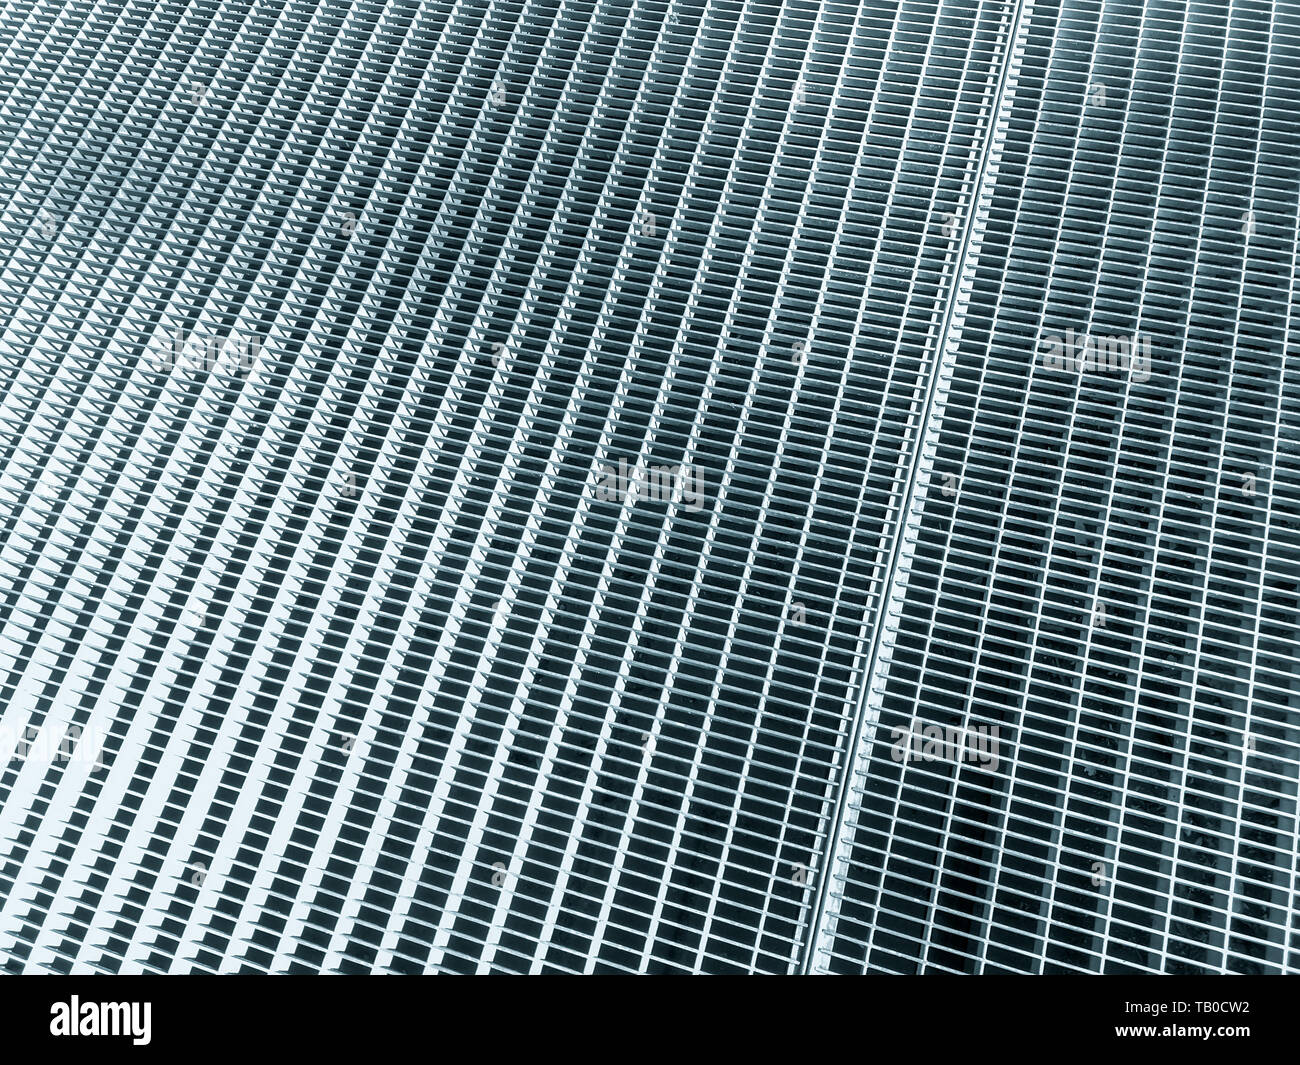 texture background of metal grid. stainless steel mesh. sidewalk subway grate or ventilation grid Stock Photo